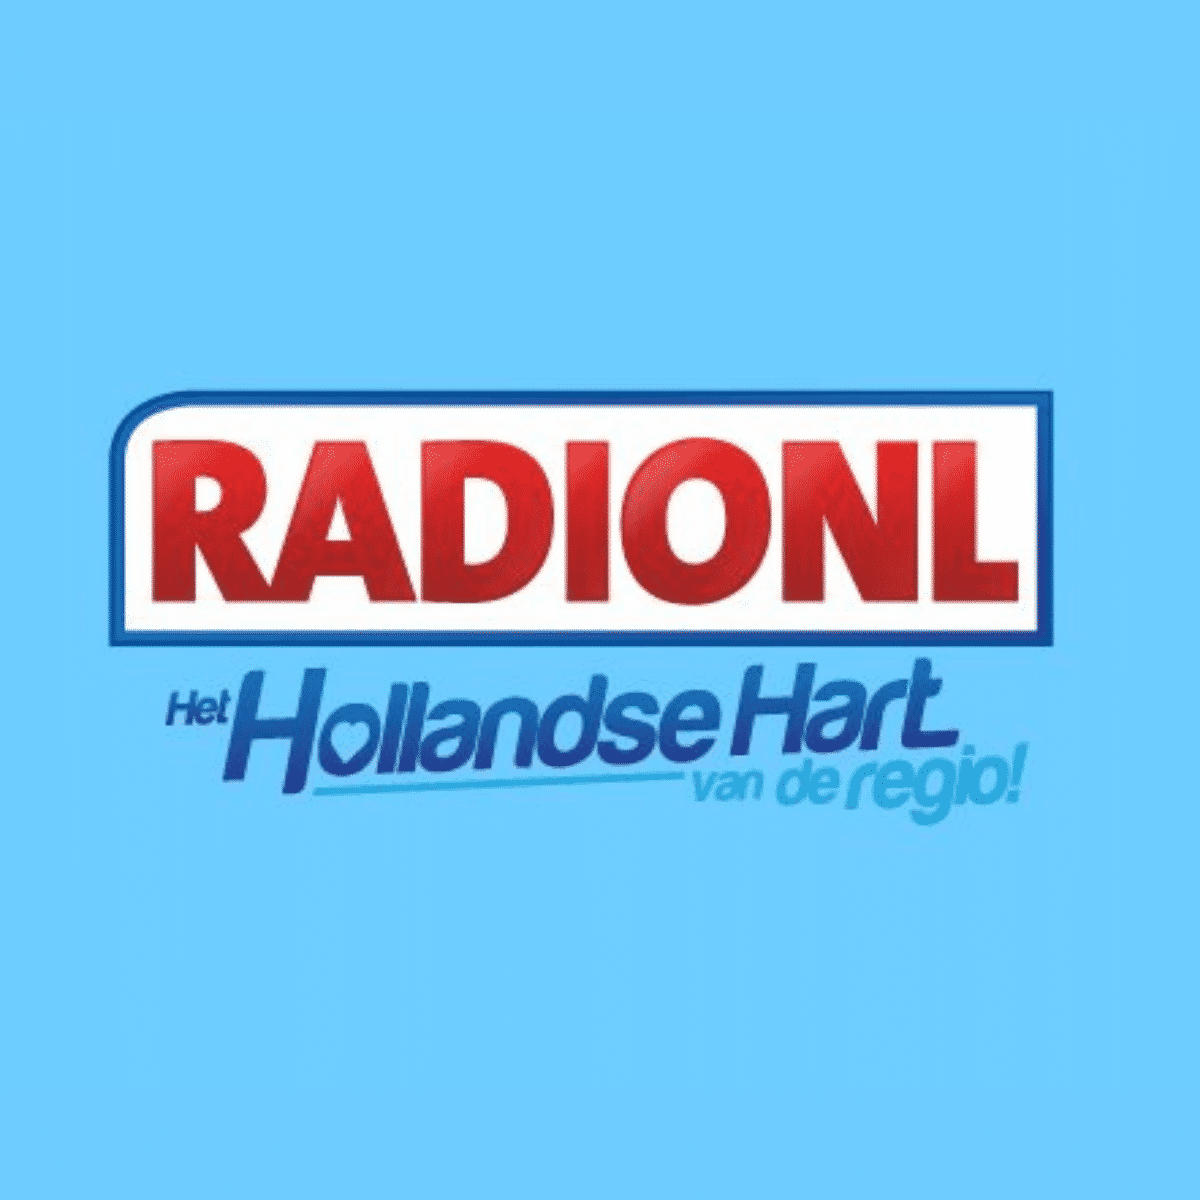 RadioNL – Hollandse Hart